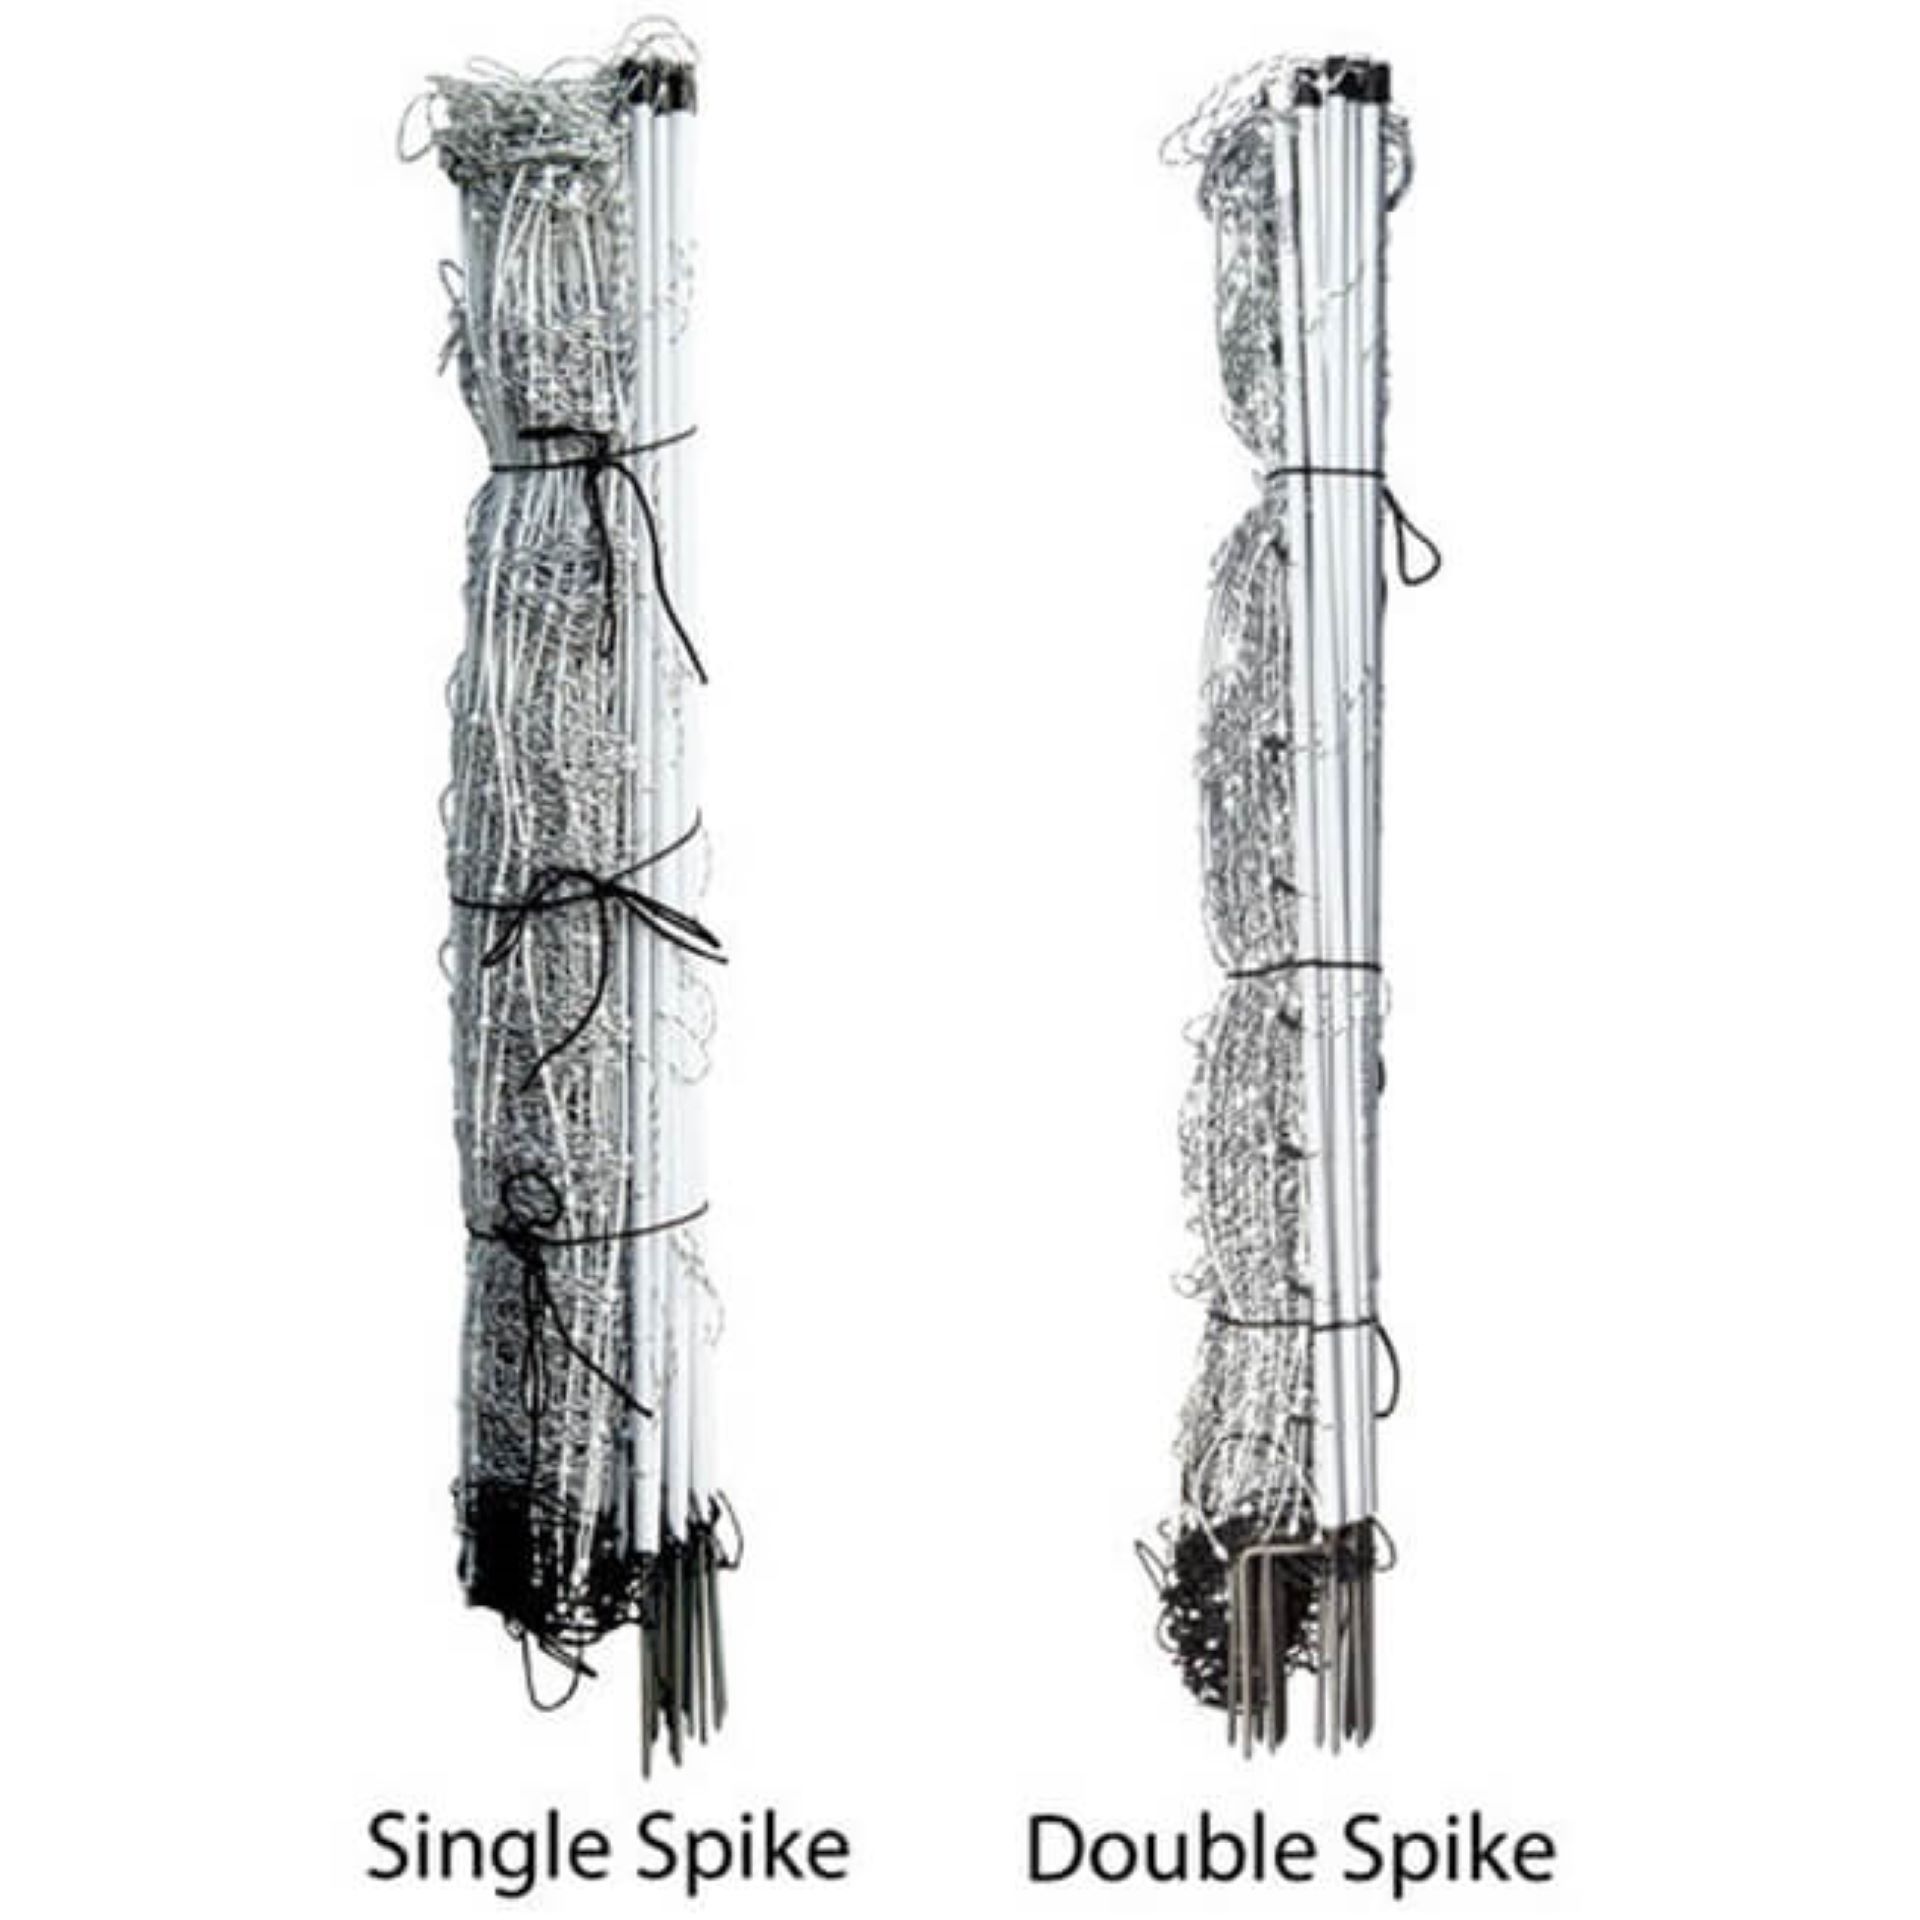 Electrostop 10/42/12 Double Spike Predator Electronet Fence